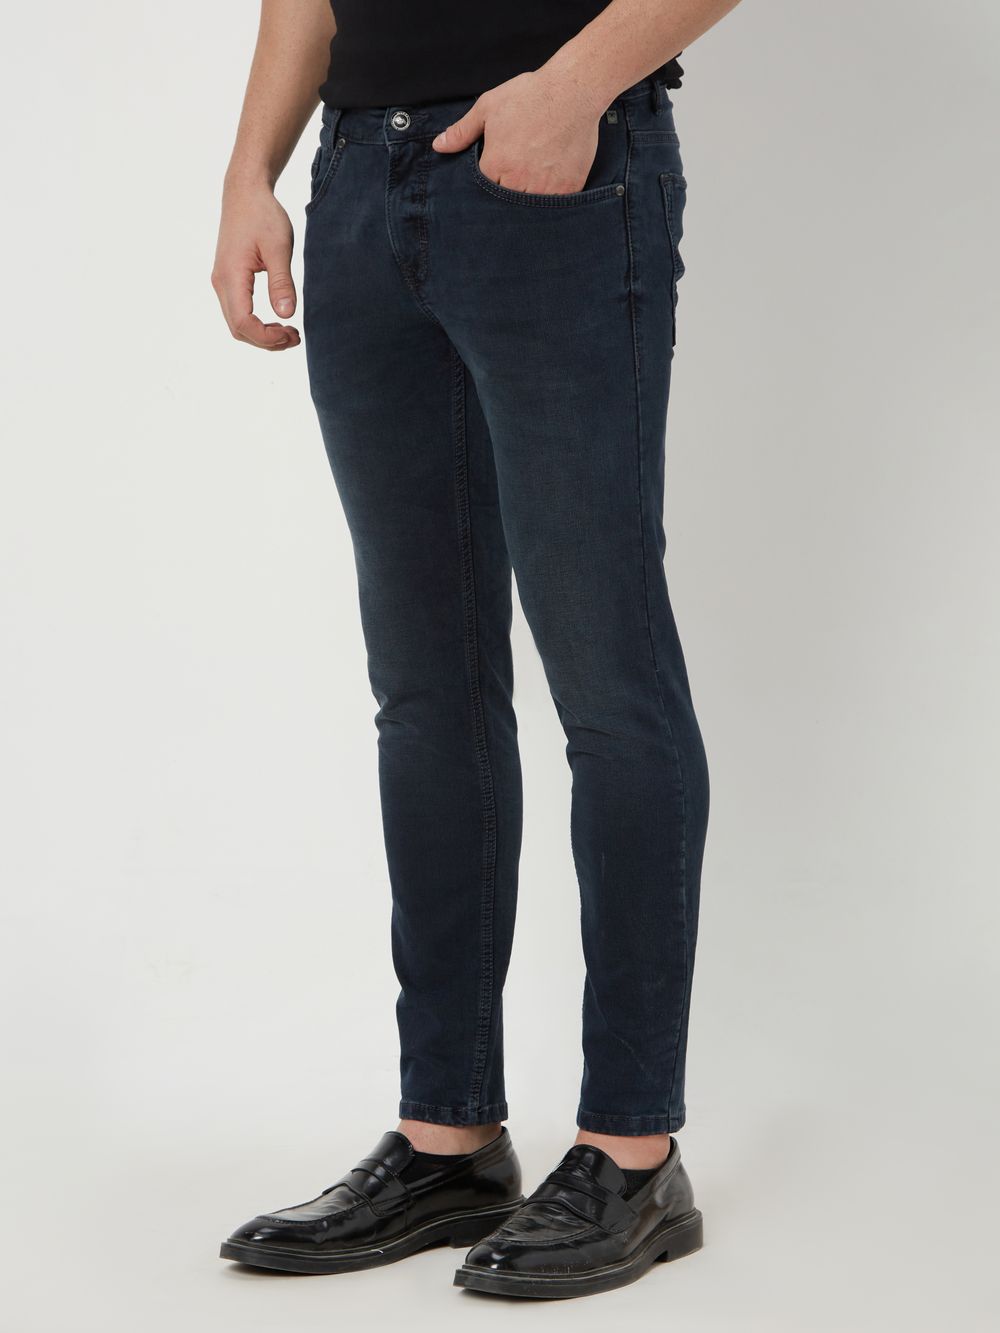 Blue Black Ankle Length Denim Deluxe Stretch Jeans